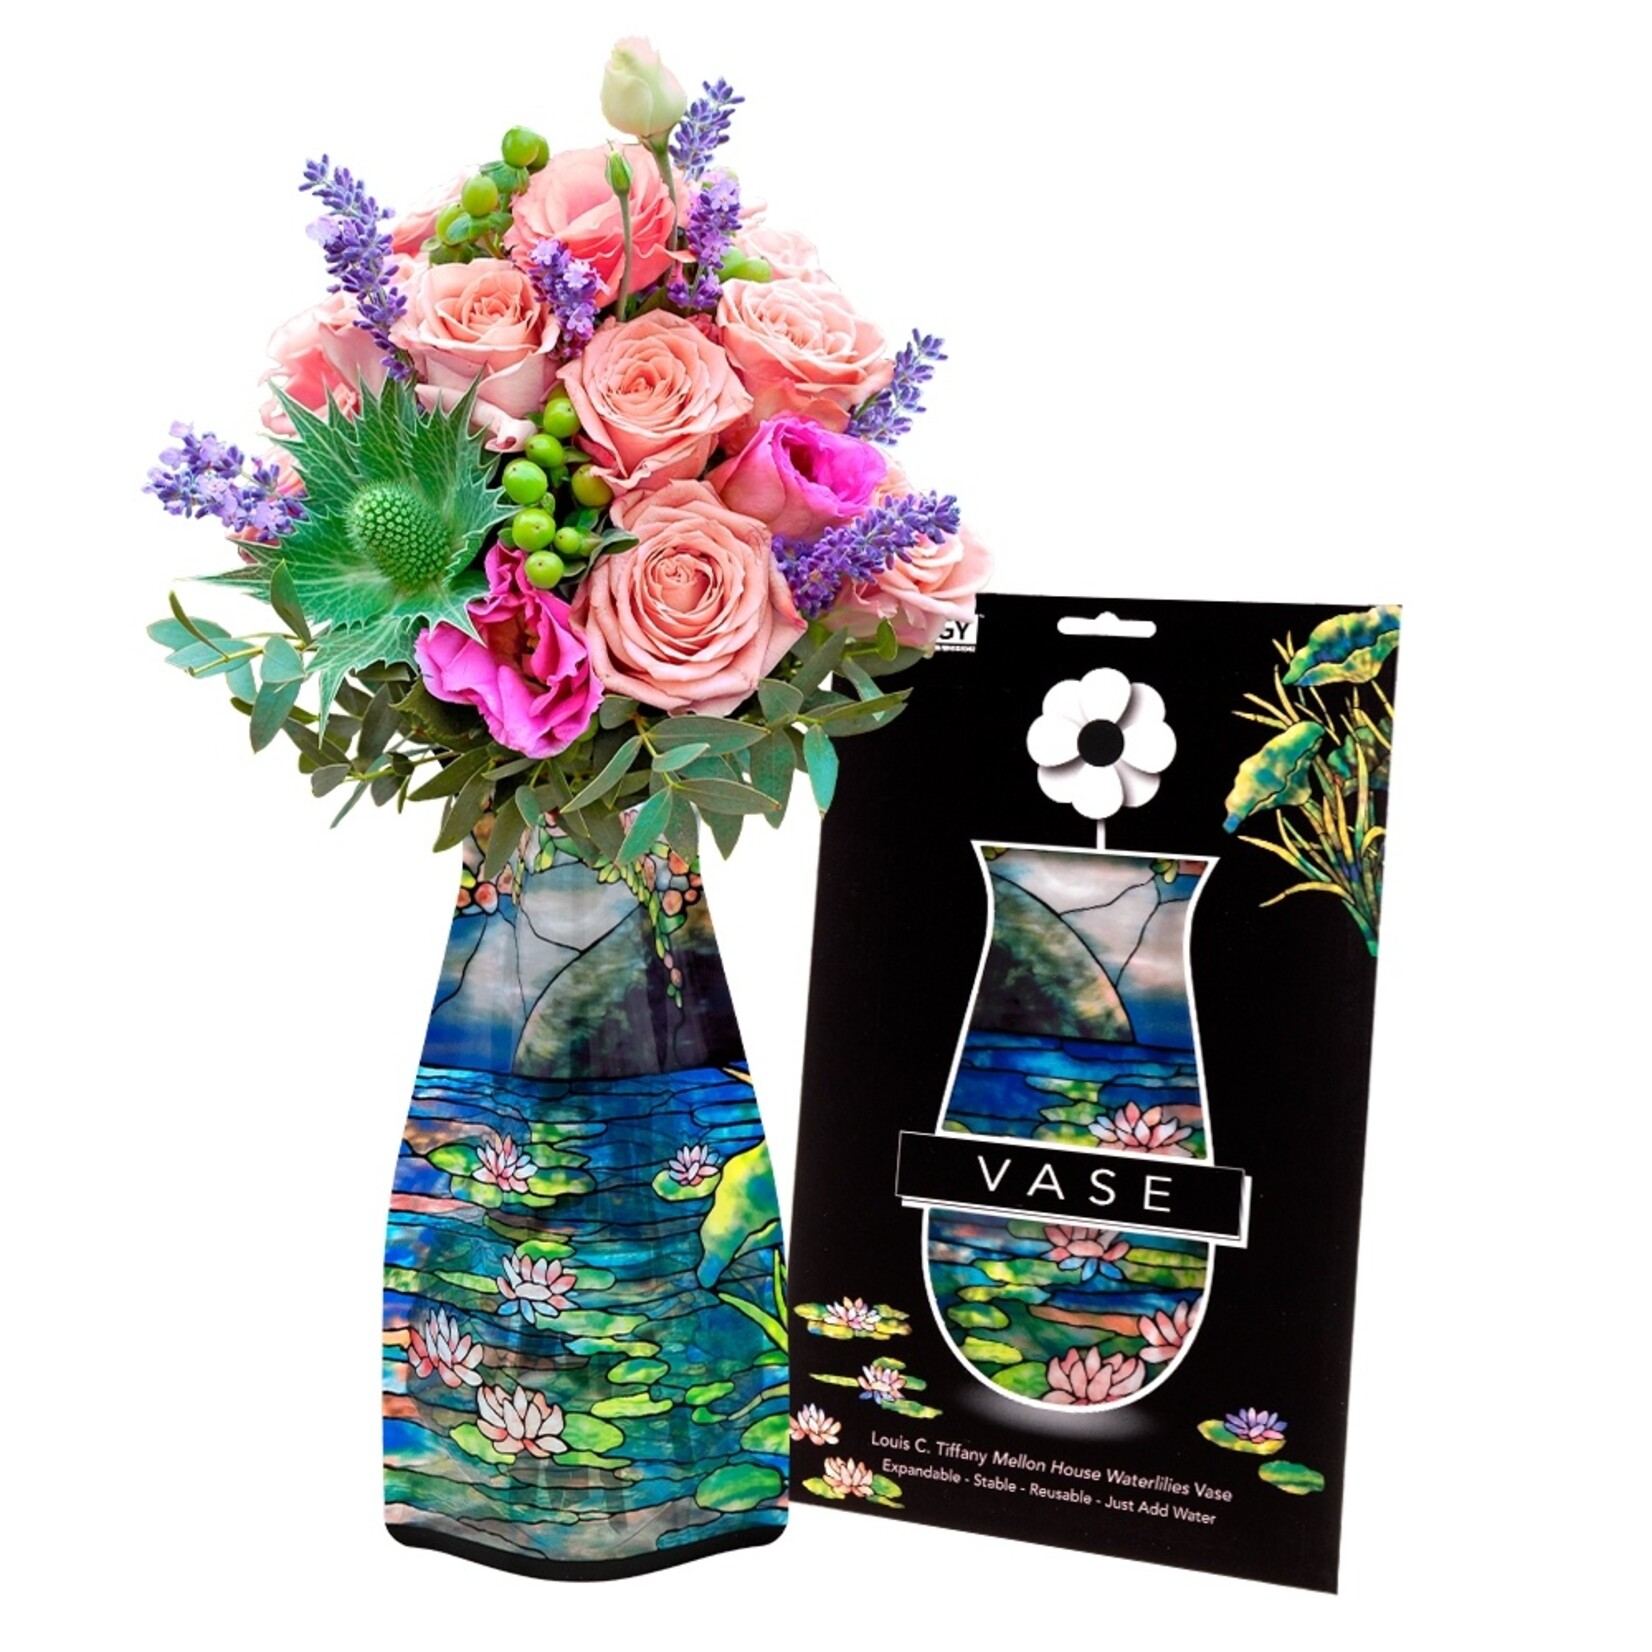 Modgy Modgy Louis C. Tiffany Mellon House Waterlilies Vase